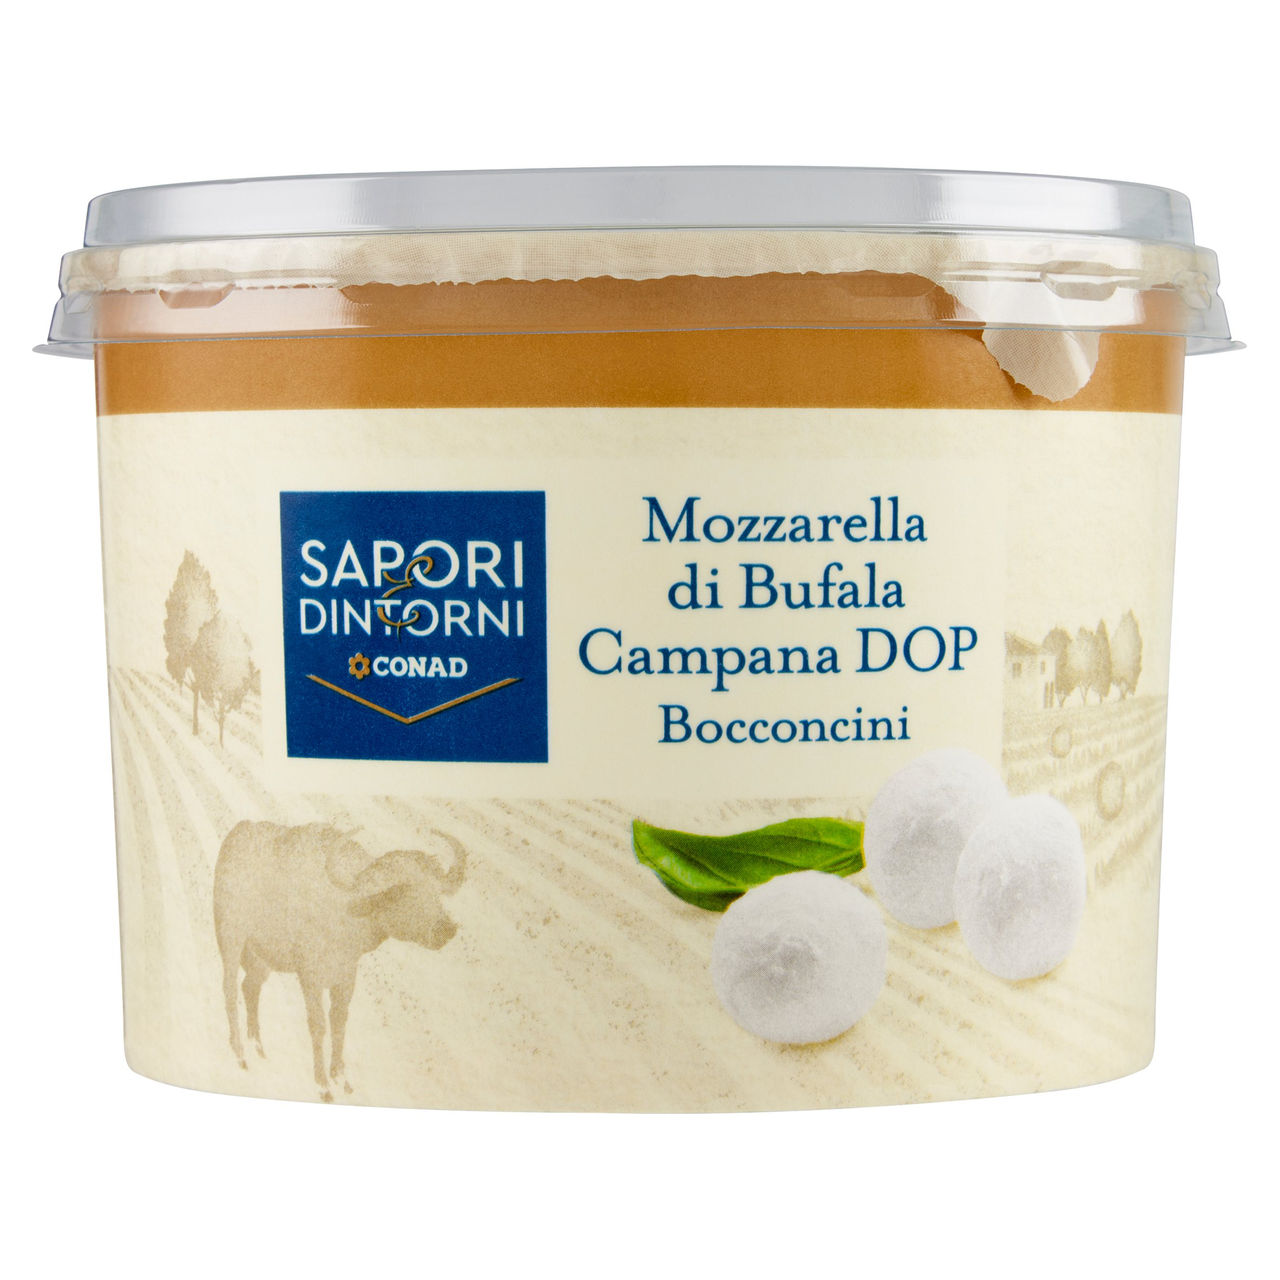 Mozzarella di Bufala Campana DOP Bocconcini 270g